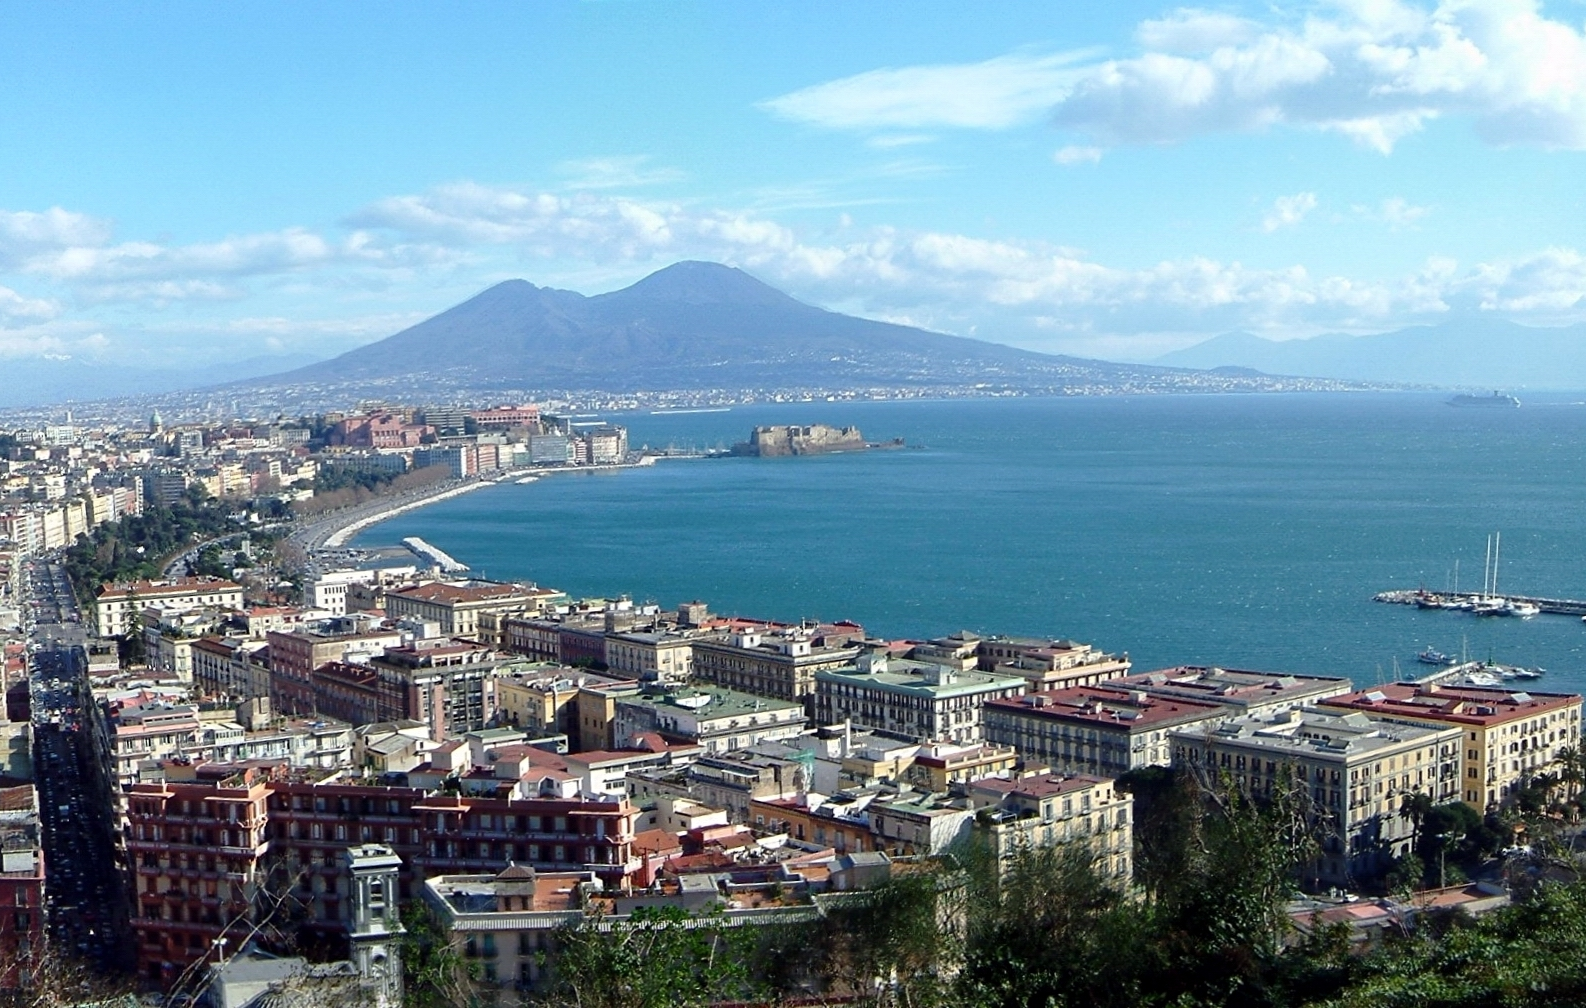 Hosting 2019 Summer Universiade gave Naples tourism boost